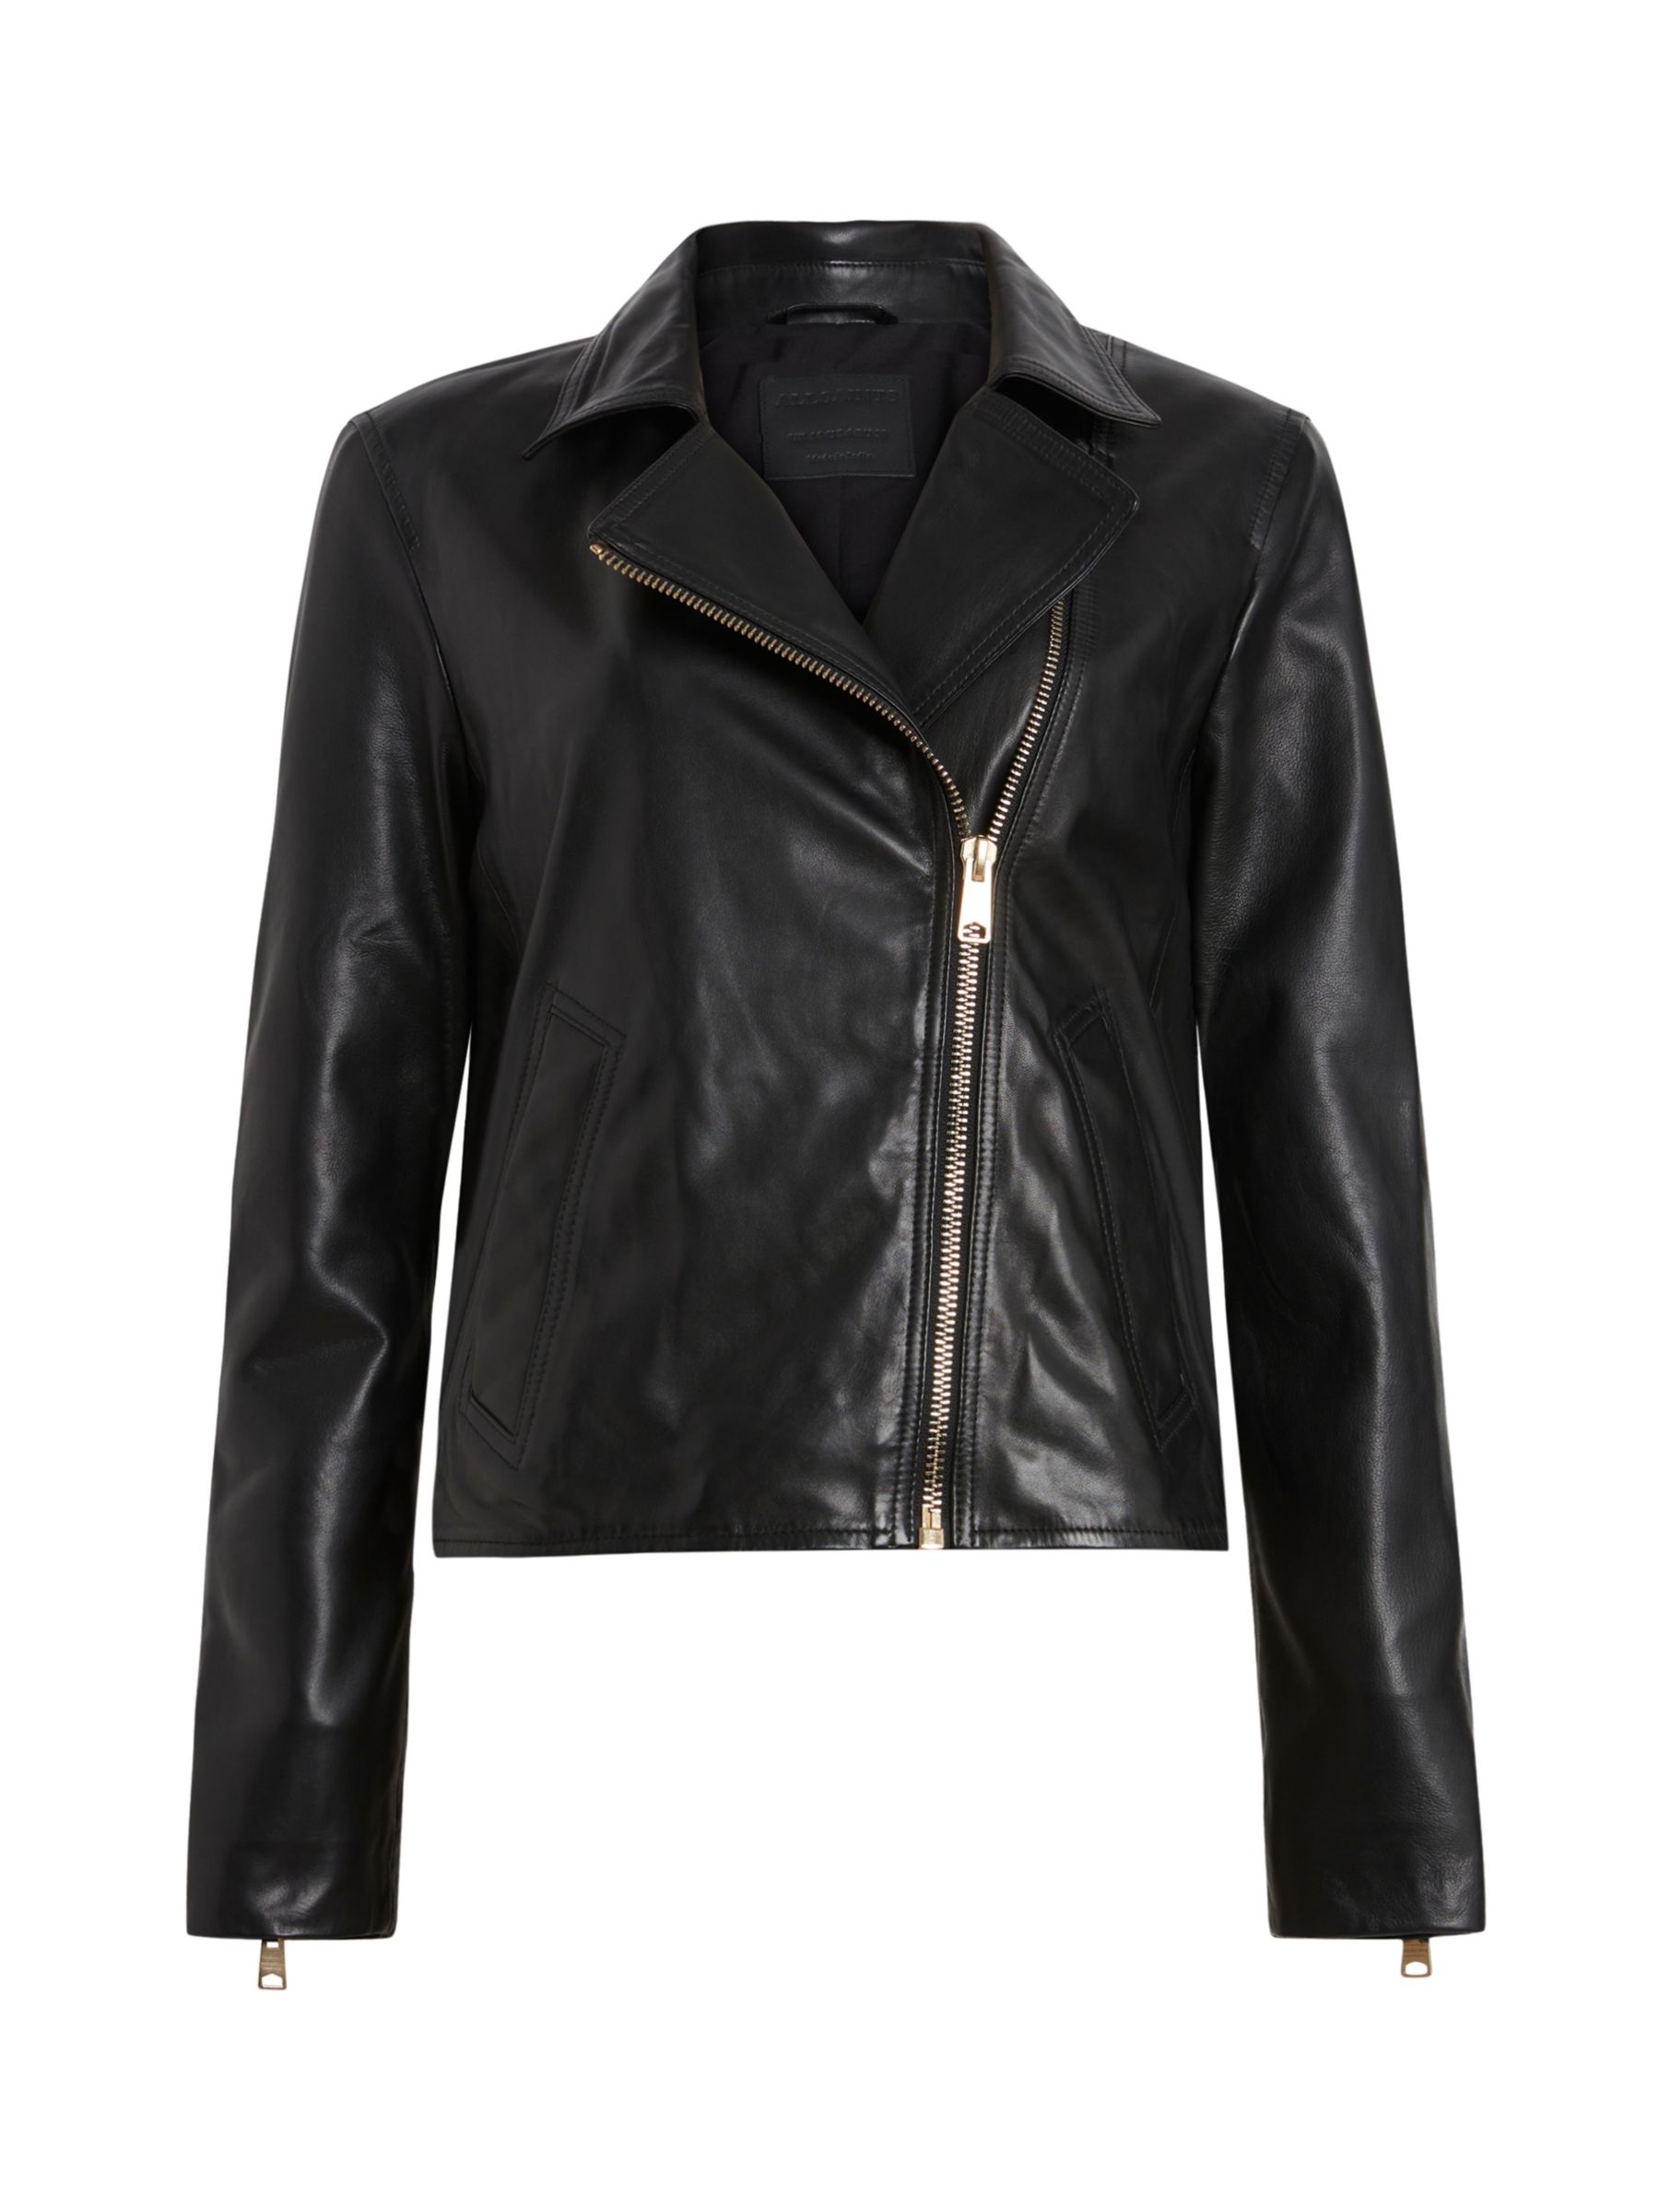 AllSaints Vela Leather Biker Jacket, Black at John Lewis & Partners